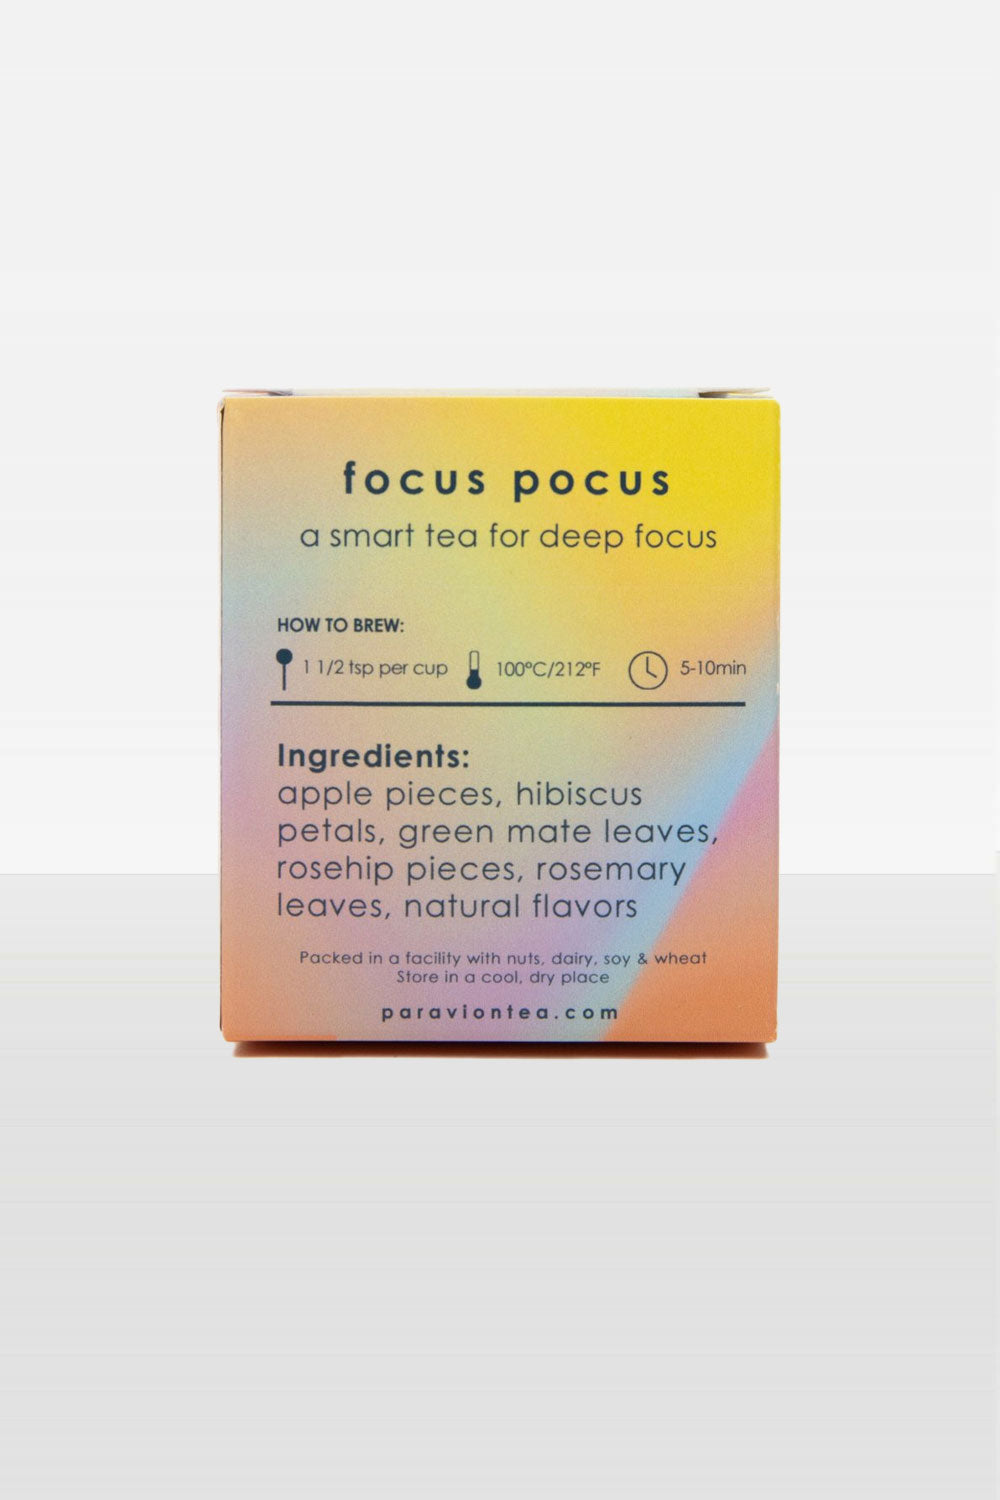 Focus Pocus - A Smart Tea for Deep Focus